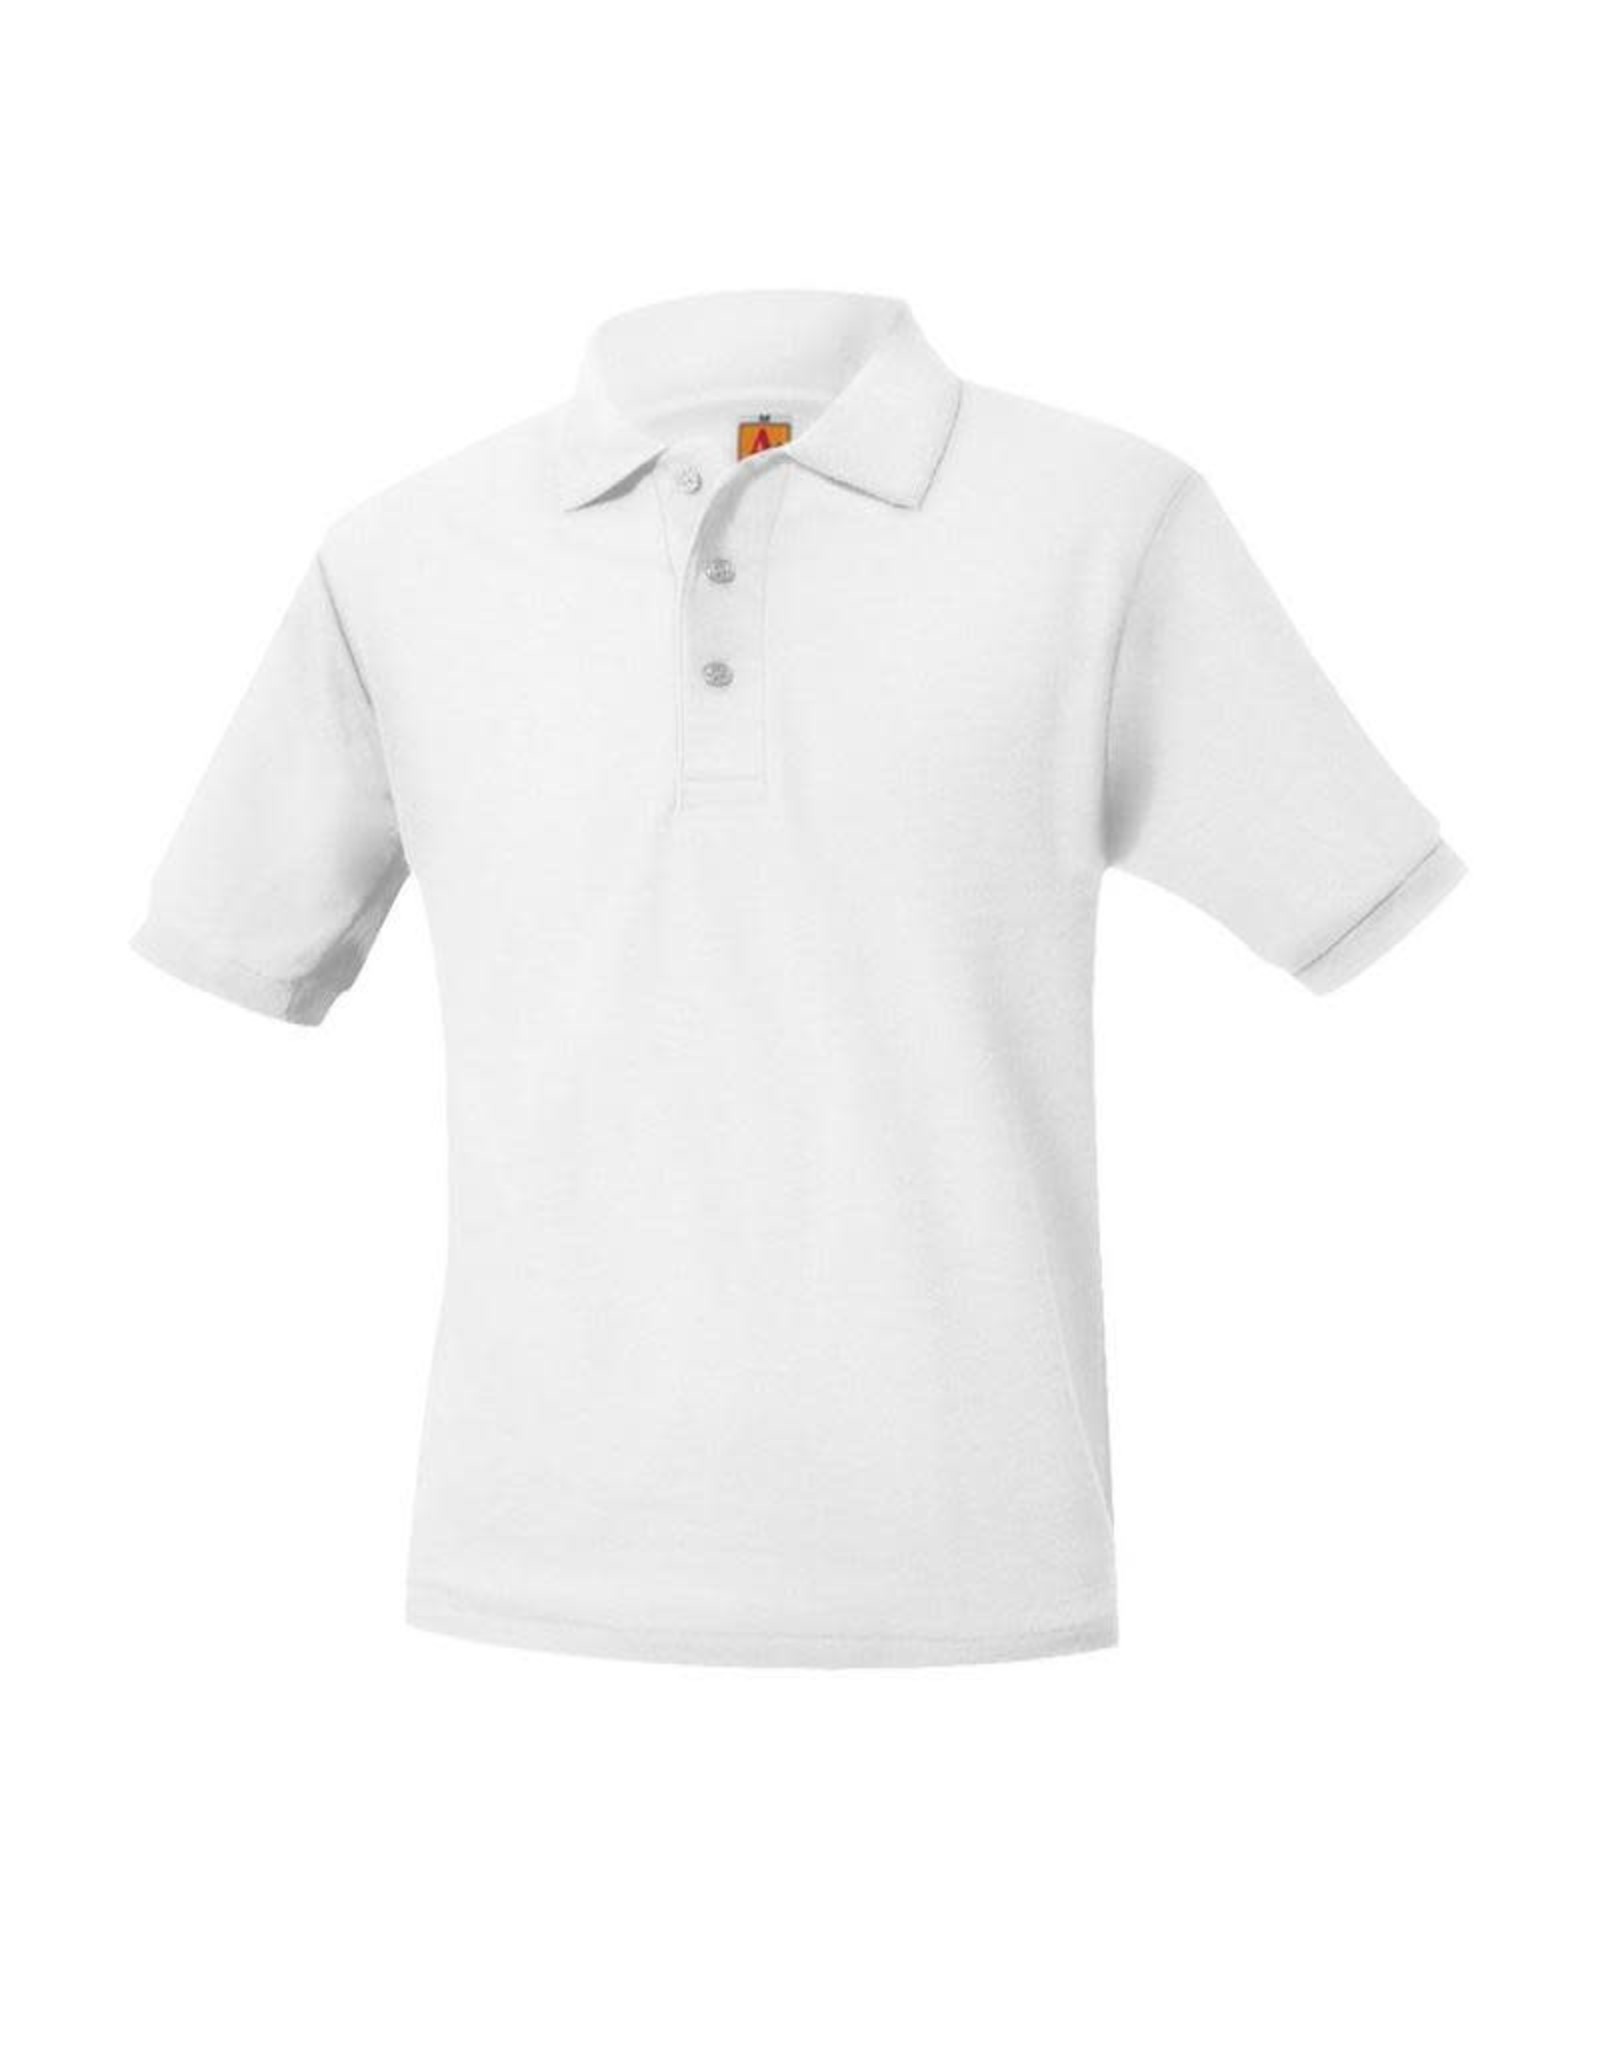 UNIFORM Unisex Polo Short Sleeve Shirt. SJBES, SJBMS, & SV schools